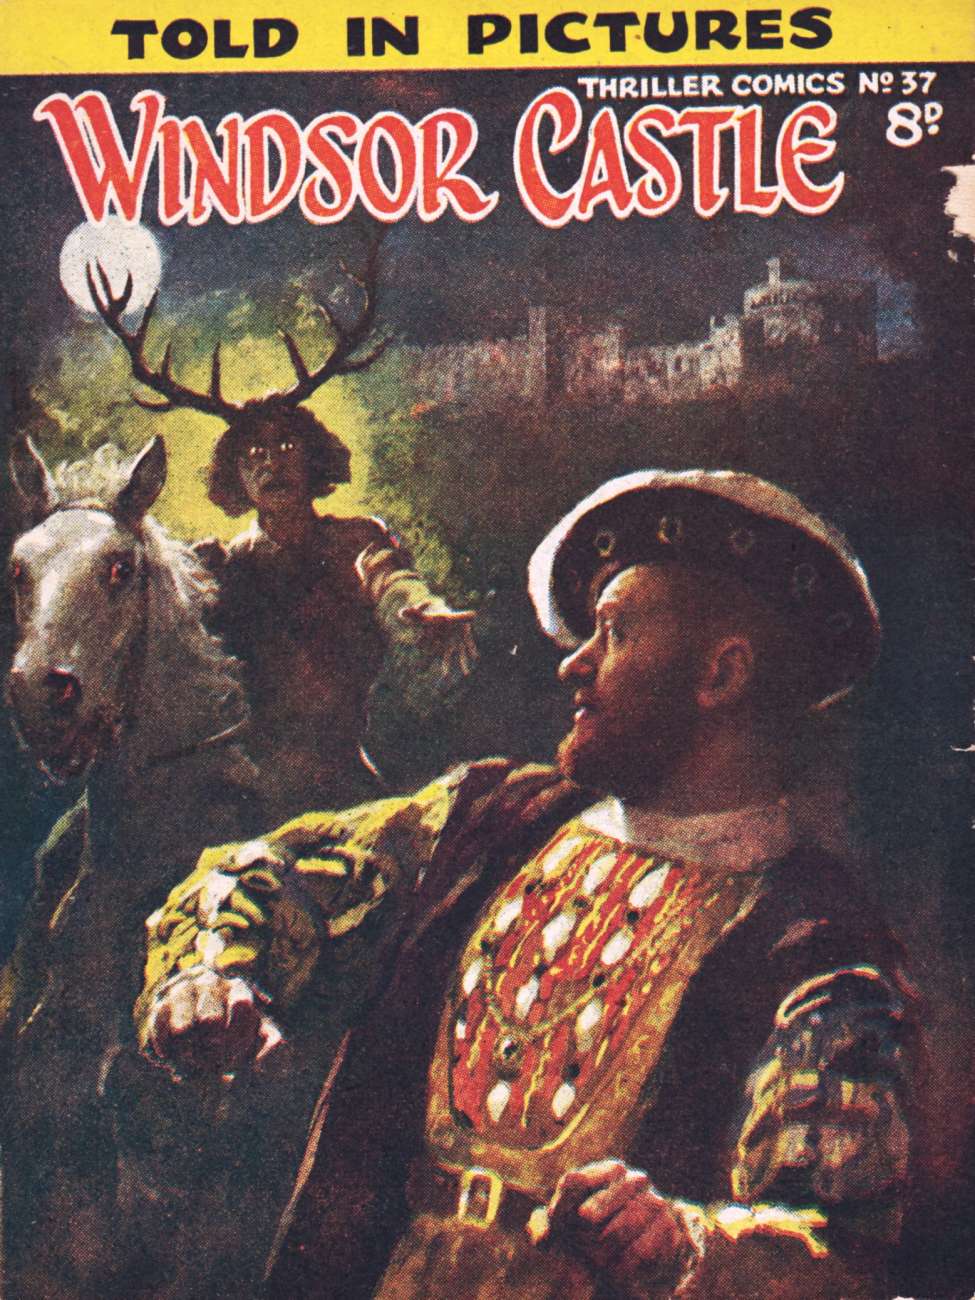 Book Cover For Thriller Comics 37 - Windsor Castle